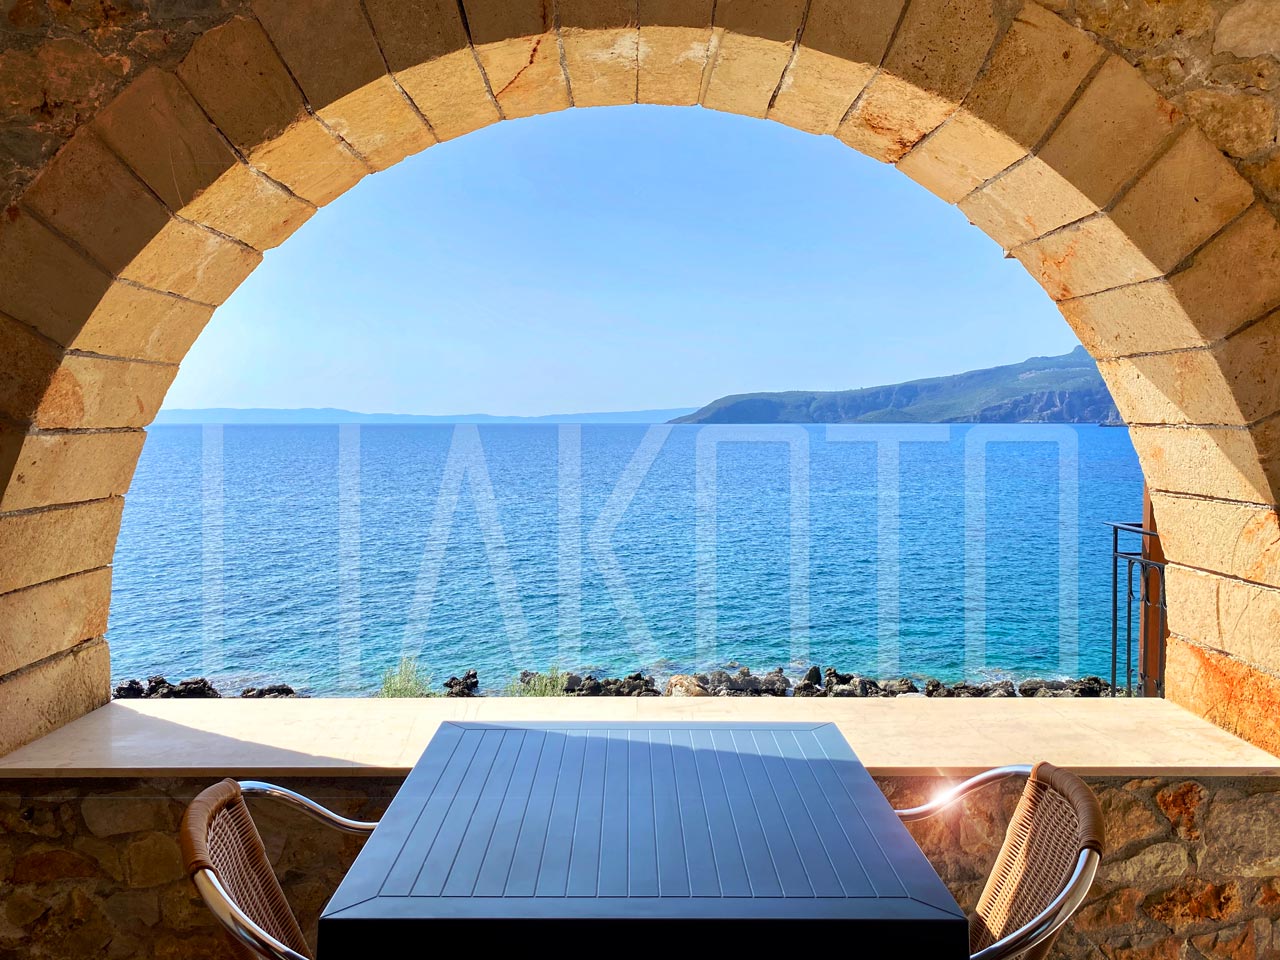 Liakoto Hotel in beautiful Kardamili, Greece